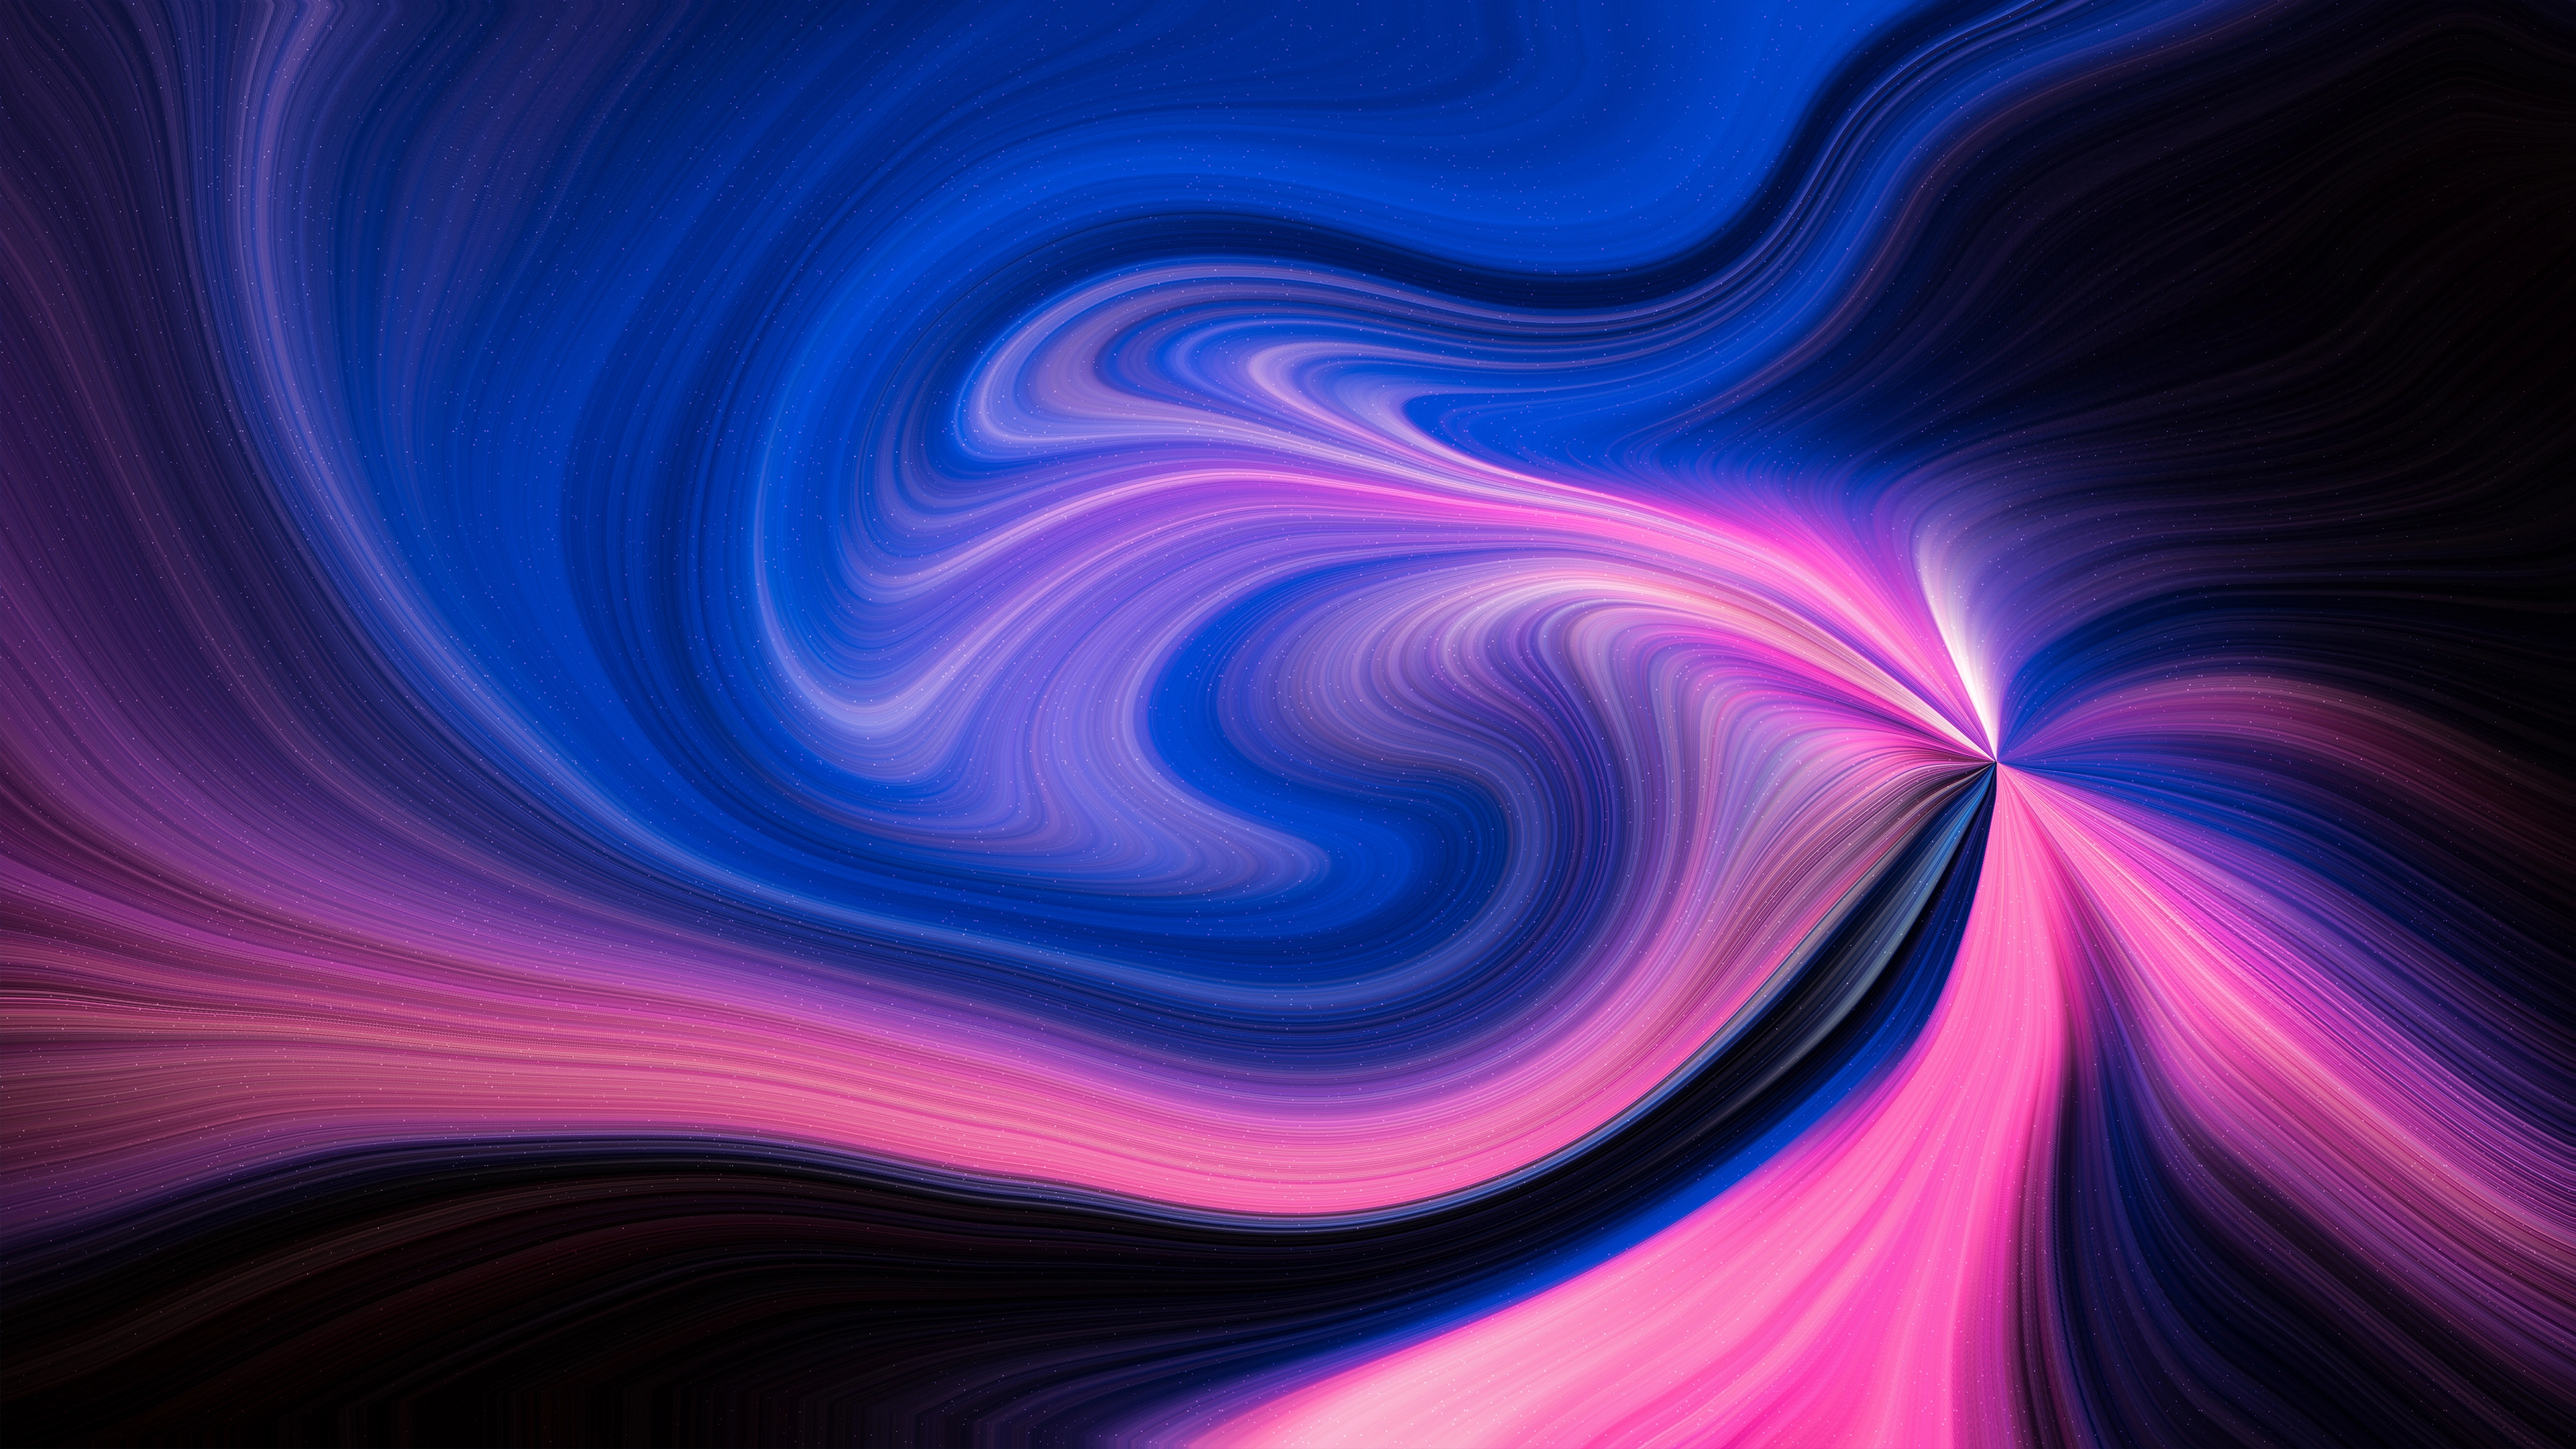 3840x2160 Swirls of pink and blue colors Wallpaper 4k Ultra HD ID:6135